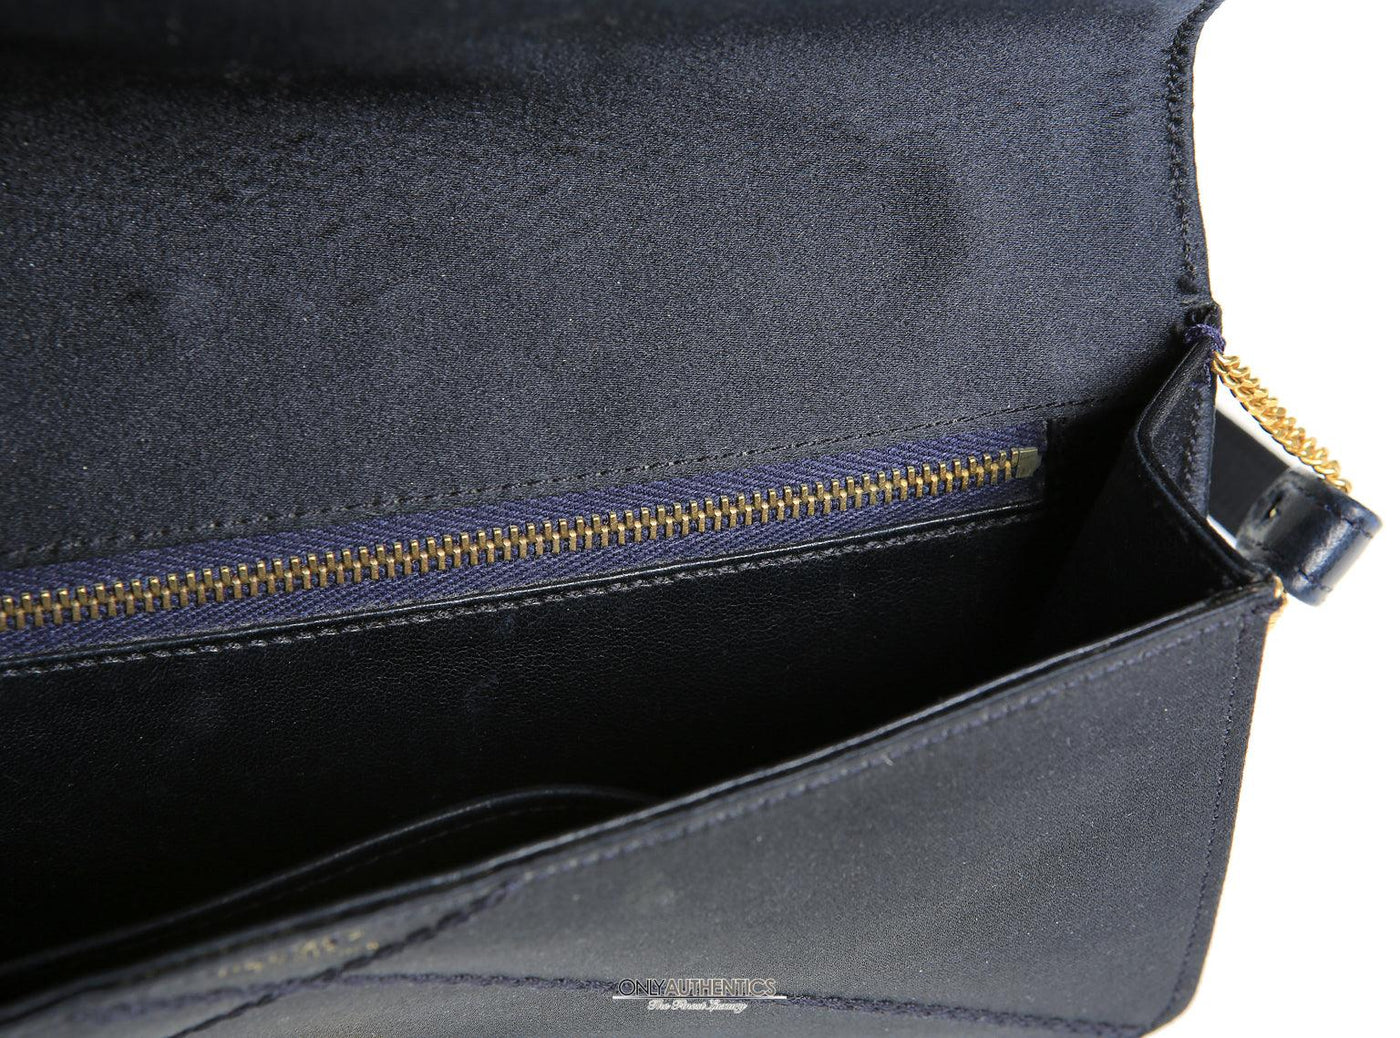 Hermès Navy Blue Satin Evening Bag – Only Authentics